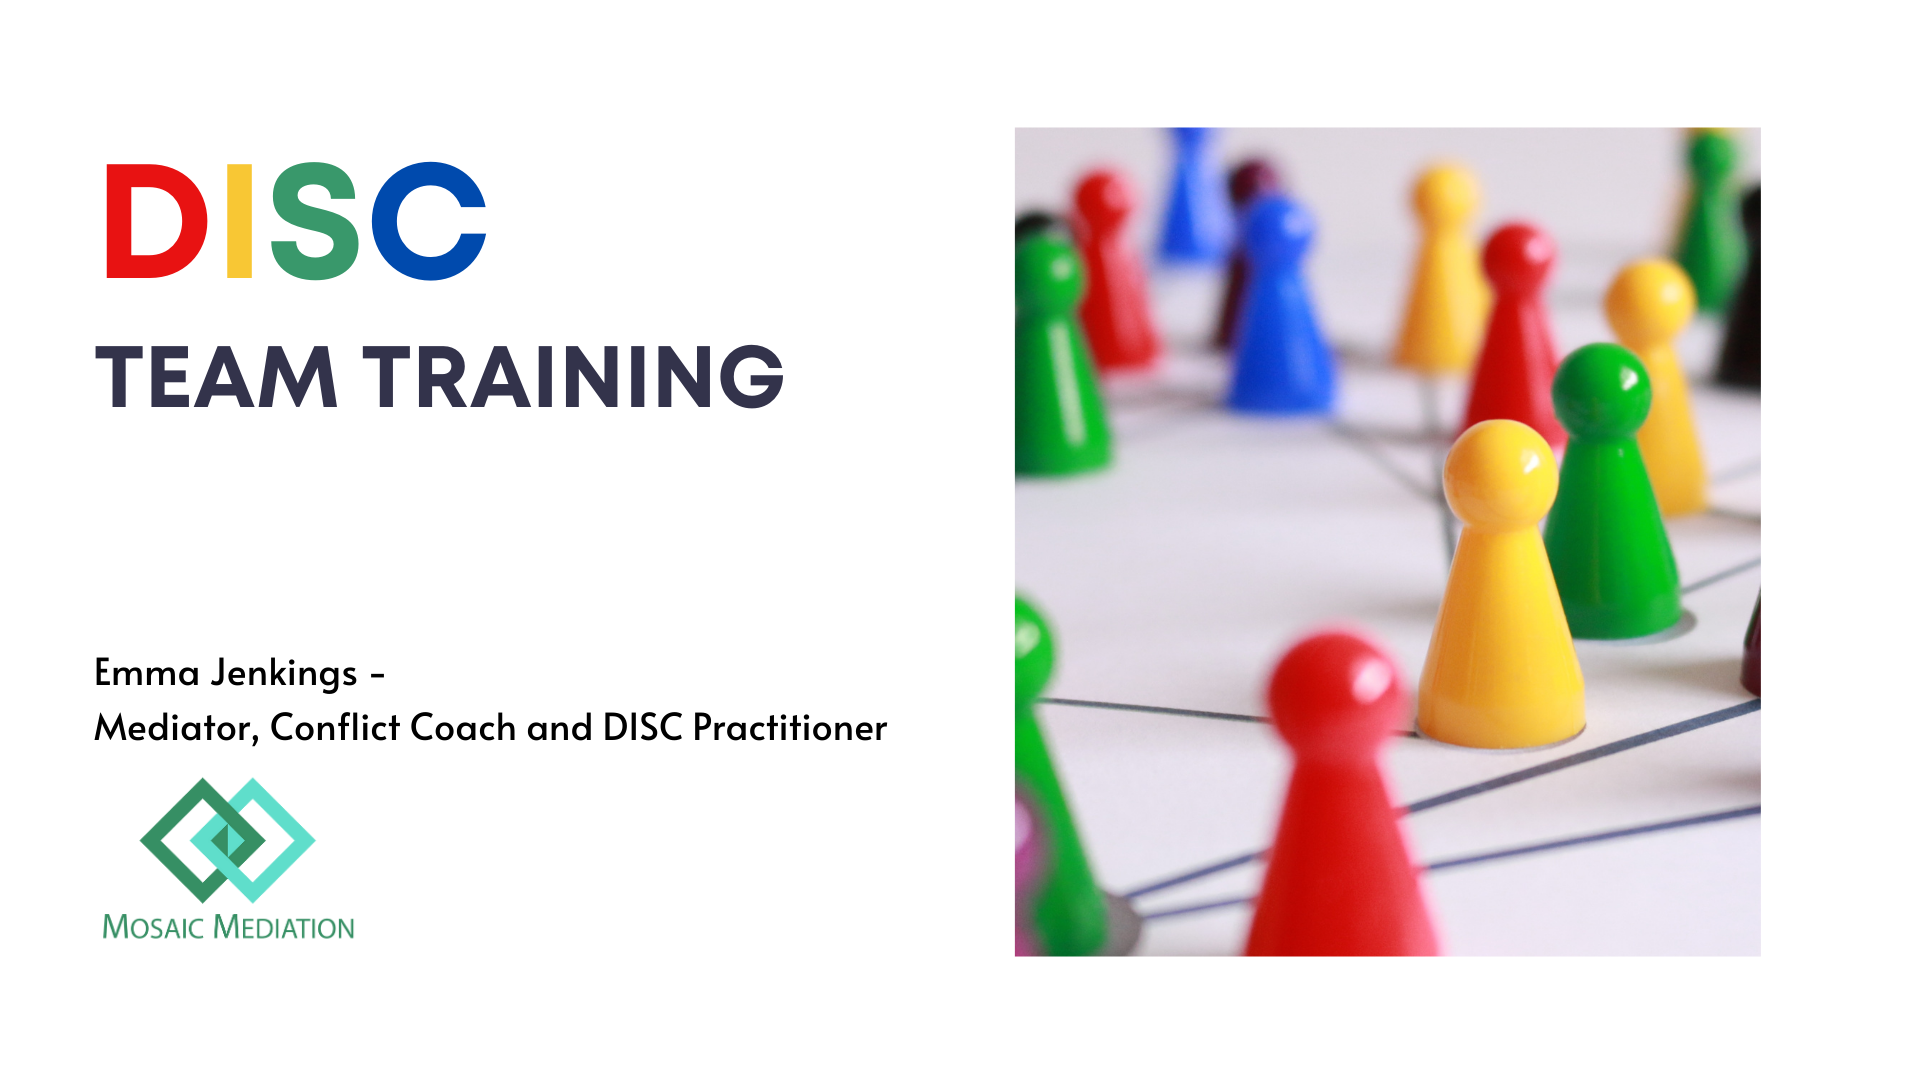 Text: DISC Team Training